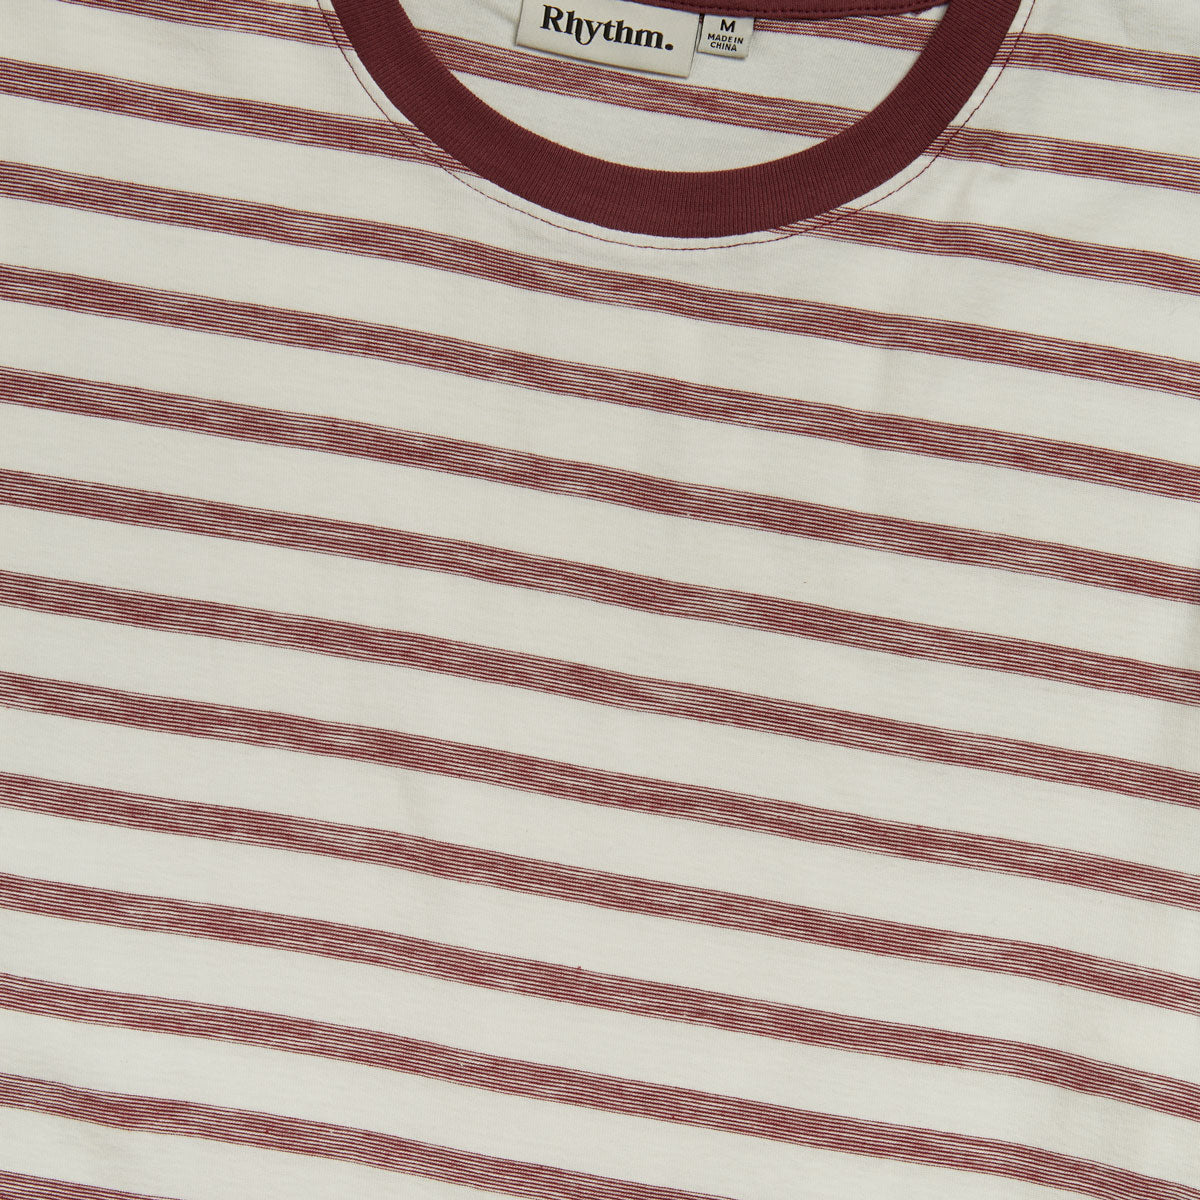 Rhythm Everyday Stripe T-Shirt - Mulberry image 3